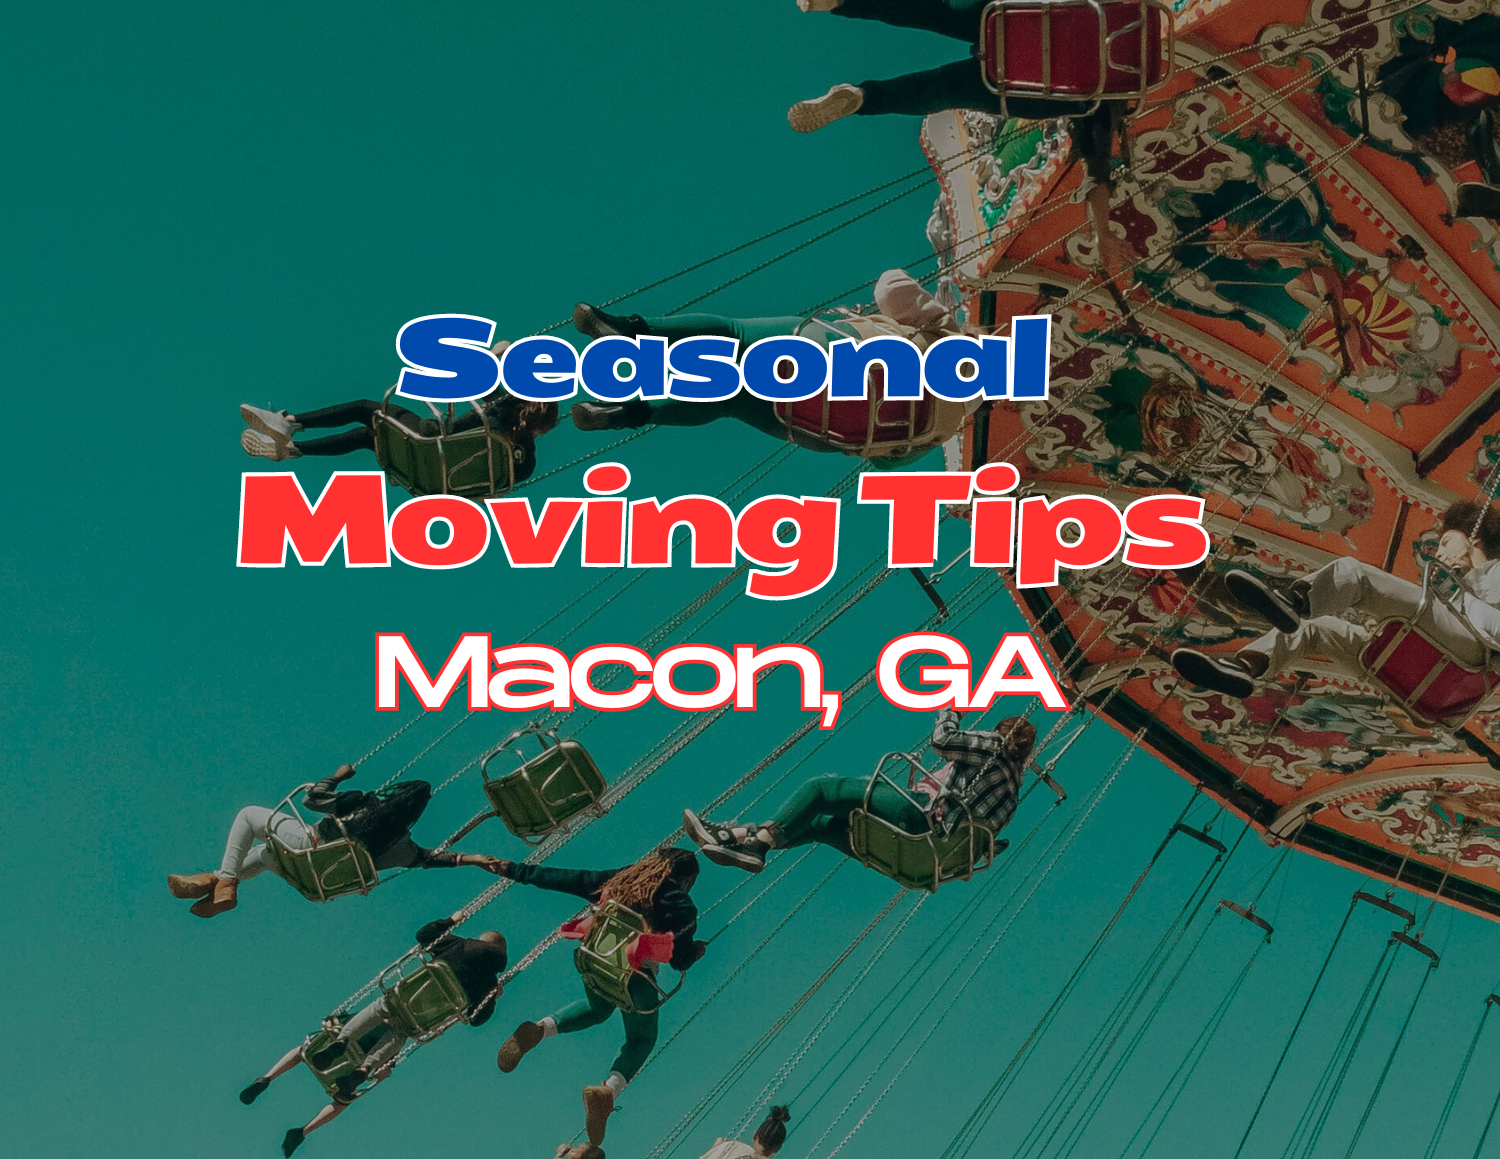 Seasonal Moving Tips Macon GA Seasonal Moving Tips for Macon GA Residents